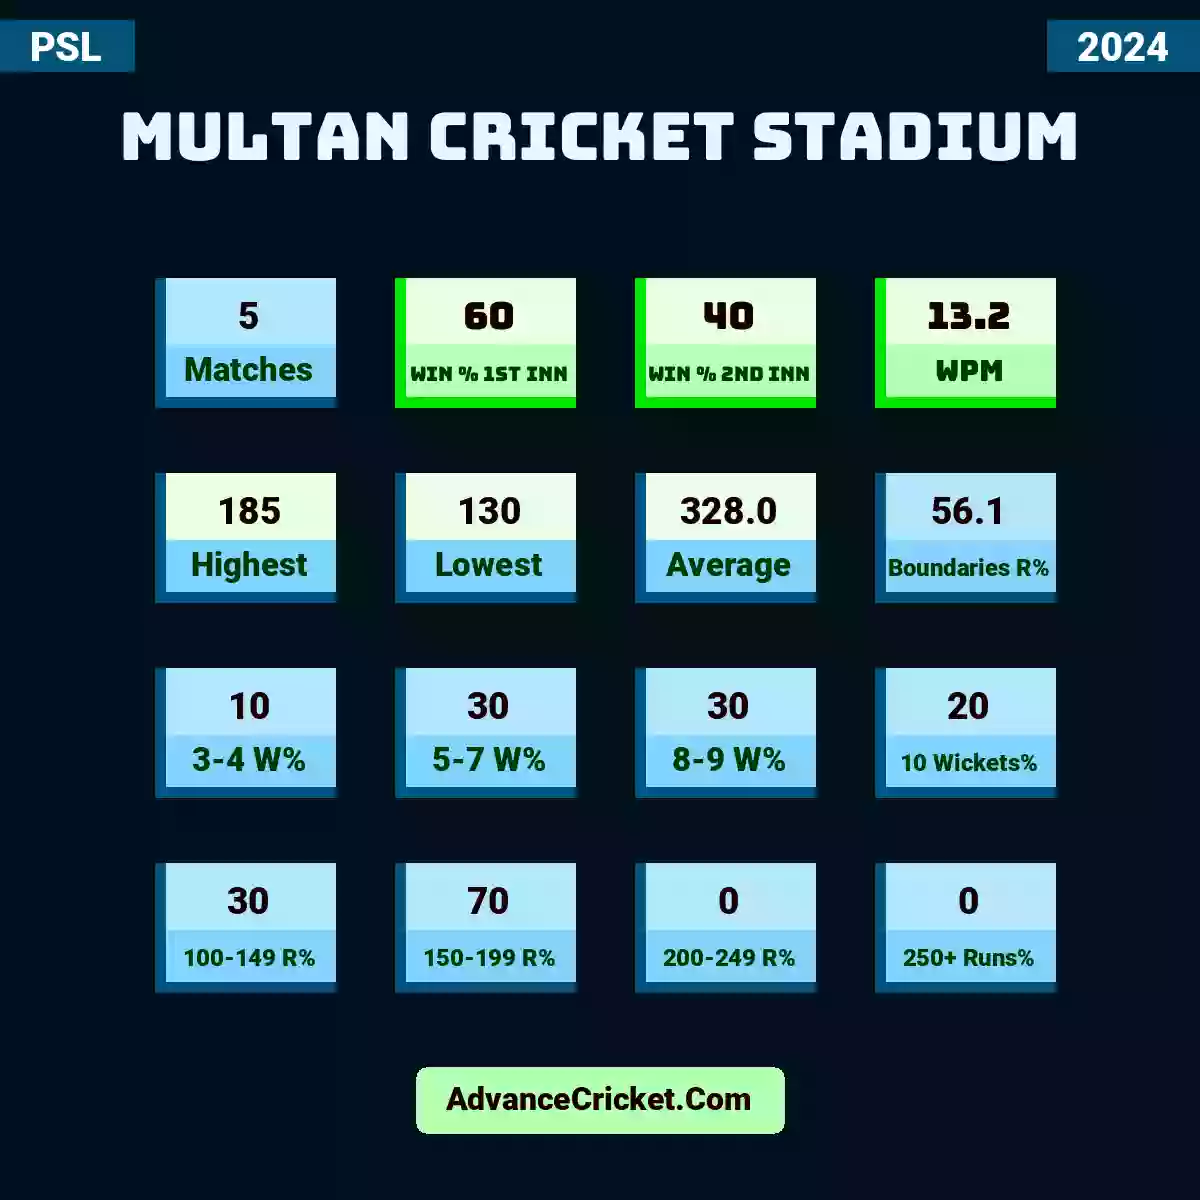 Image showing Multan Cricket Stadium with Matches: 5, Win % 1st Inn: 60, Win % 2nd Inn: 40, WPM: 13.2, Highest: 185, Lowest: 130, Average: 328.0, Boundaries R%: 56.1, 3-4 W%: 10, 5-7 W%: 30, 8-9 W%: 30, 10 Wickets%: 20, 100-149 R%: 30, 150-199 R%: 70, 200-249 R%: 0, 250+ Runs%: 0.